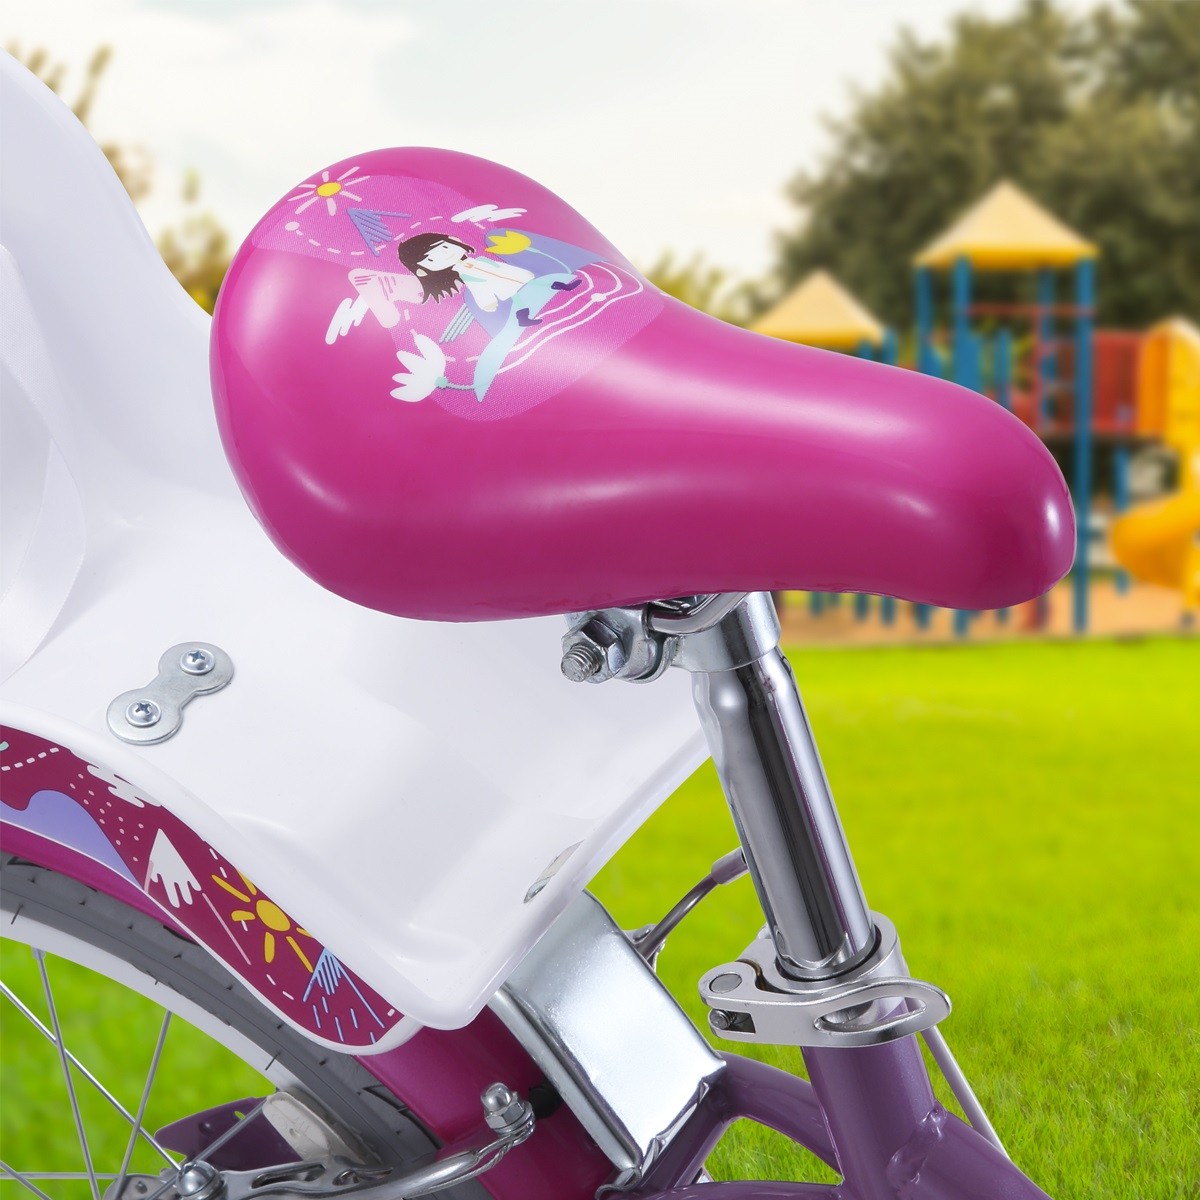 Bicicleta Infantil Beauty Aro 16